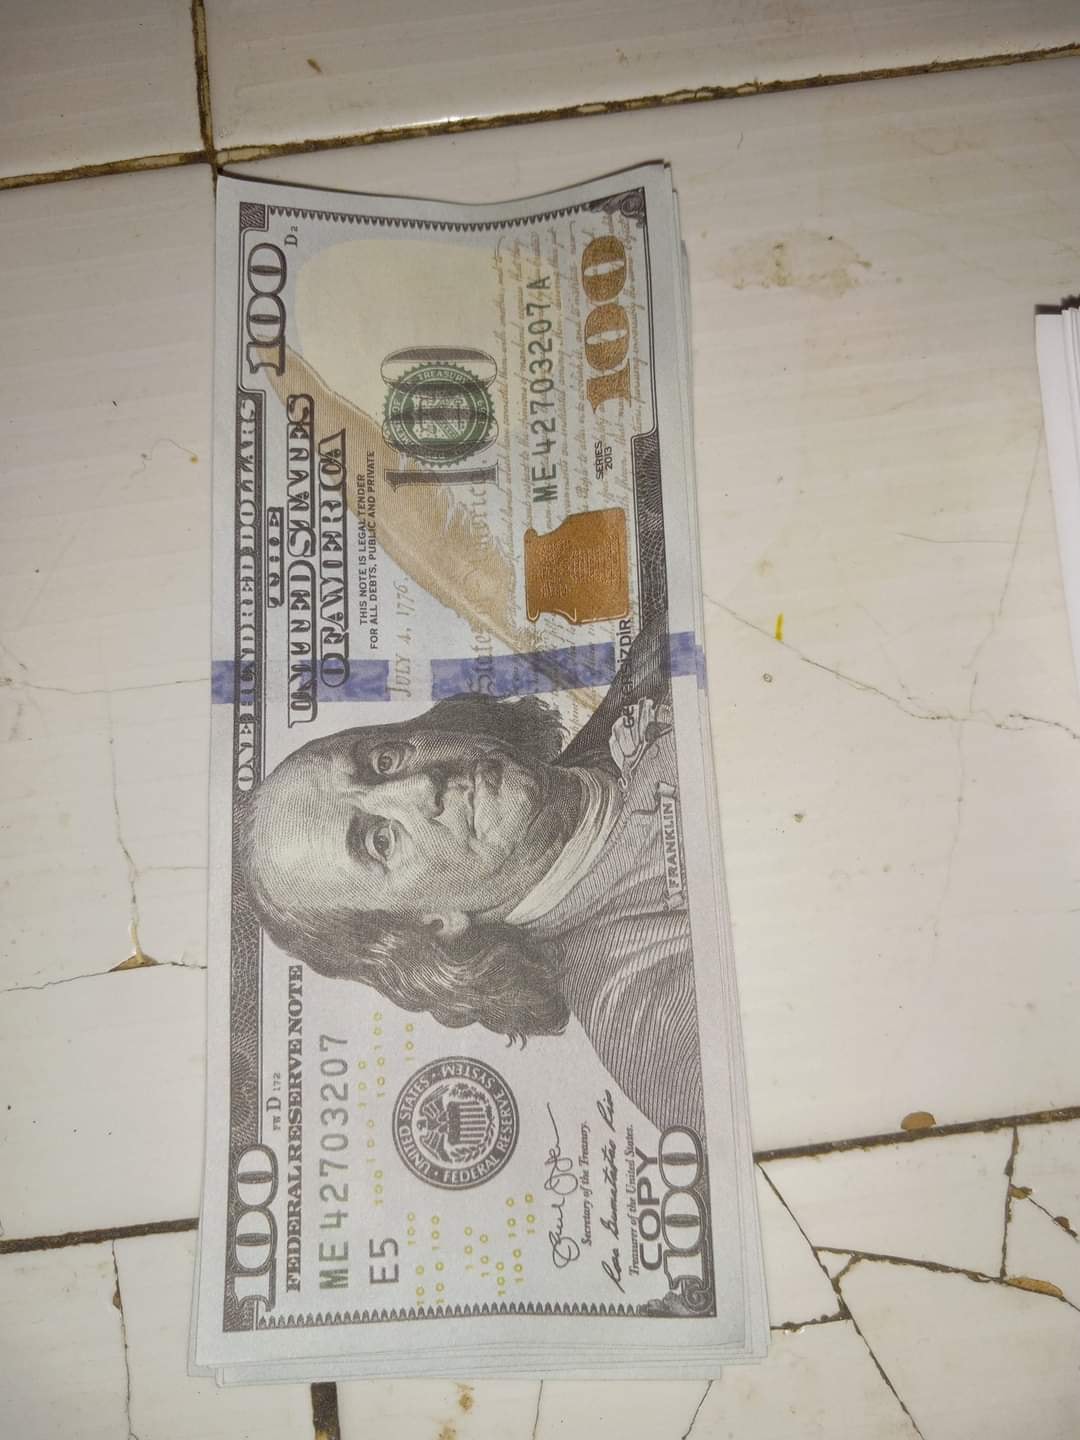 The Fake money